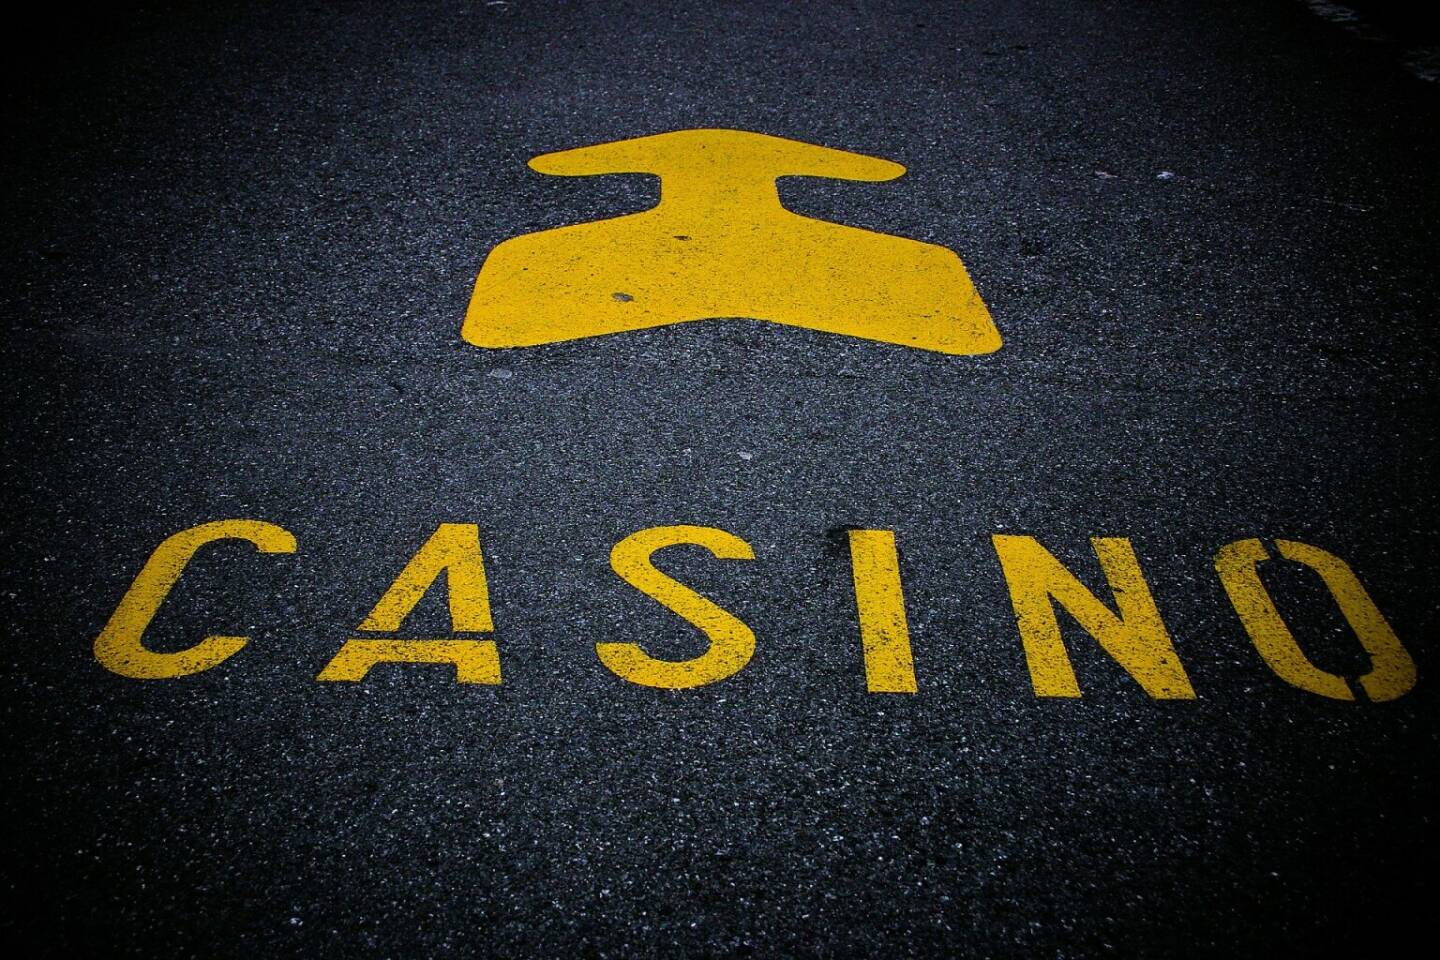 Casino, Pfeil - https://pixabay.com/de/photos/casino-hinweis-fahrbahn-markierung-594157/